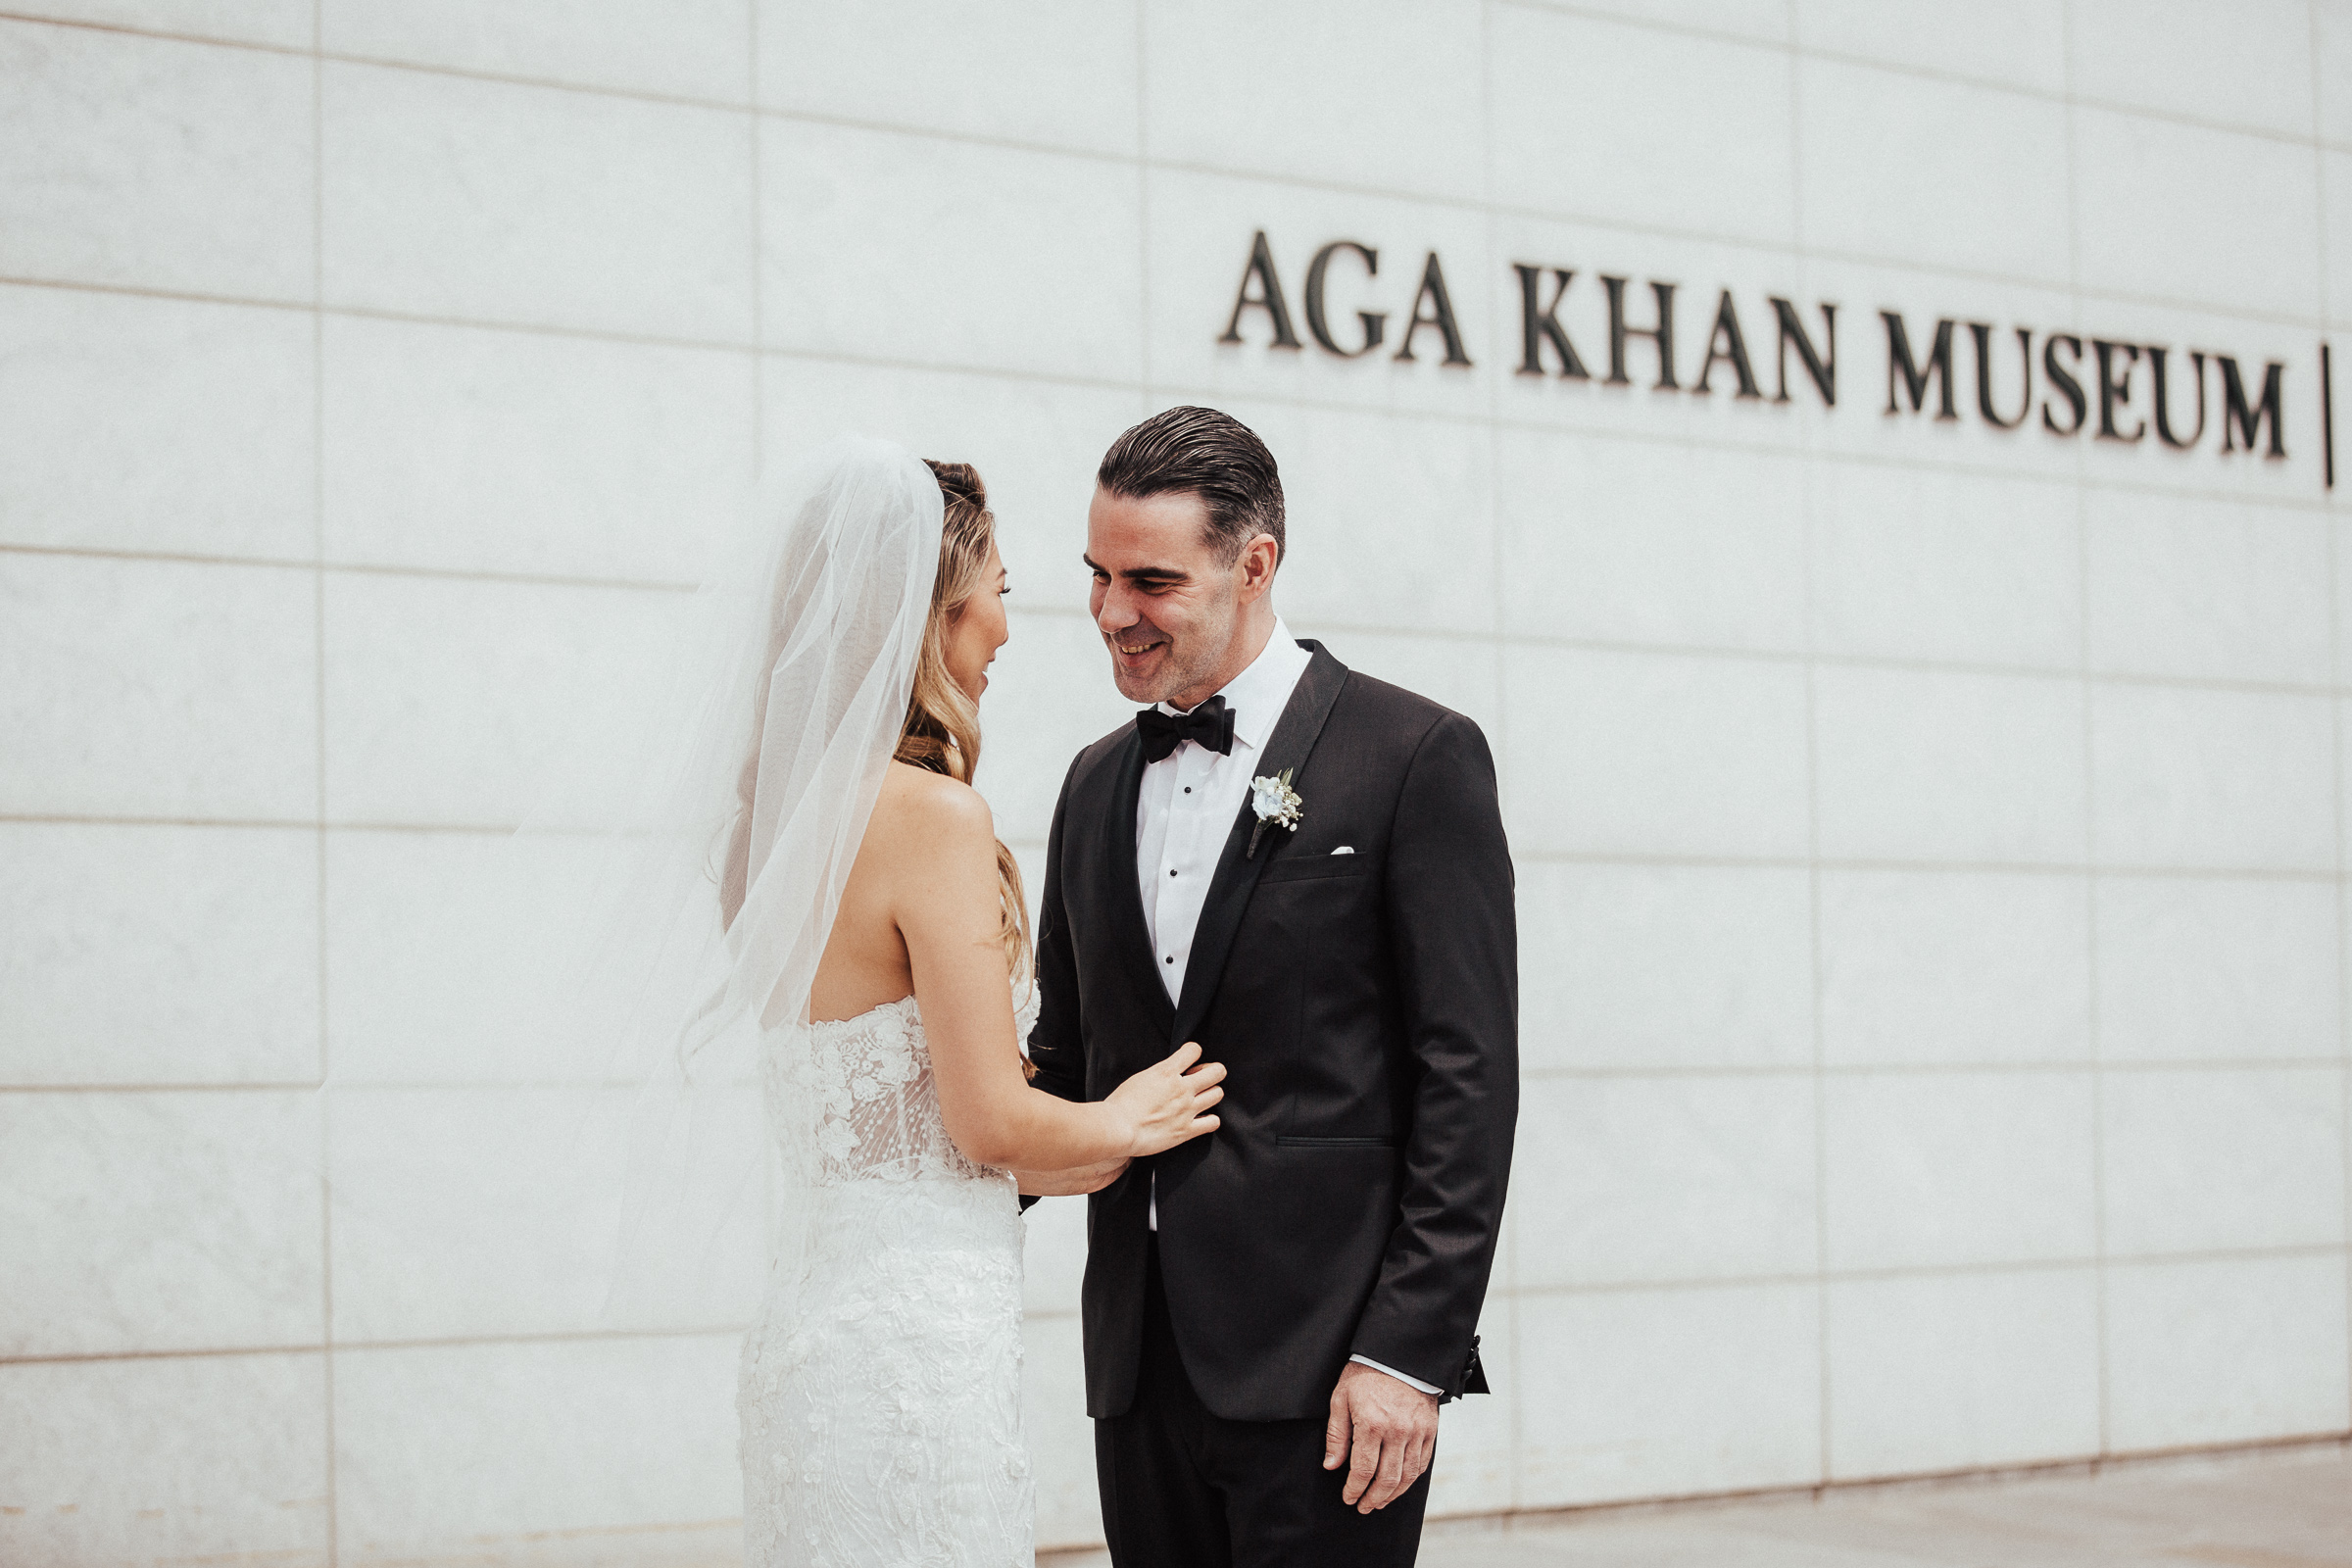 Auberge Du Pommier & Aga Khan Museum Wedding Photos by Toronto Wedding Photographer